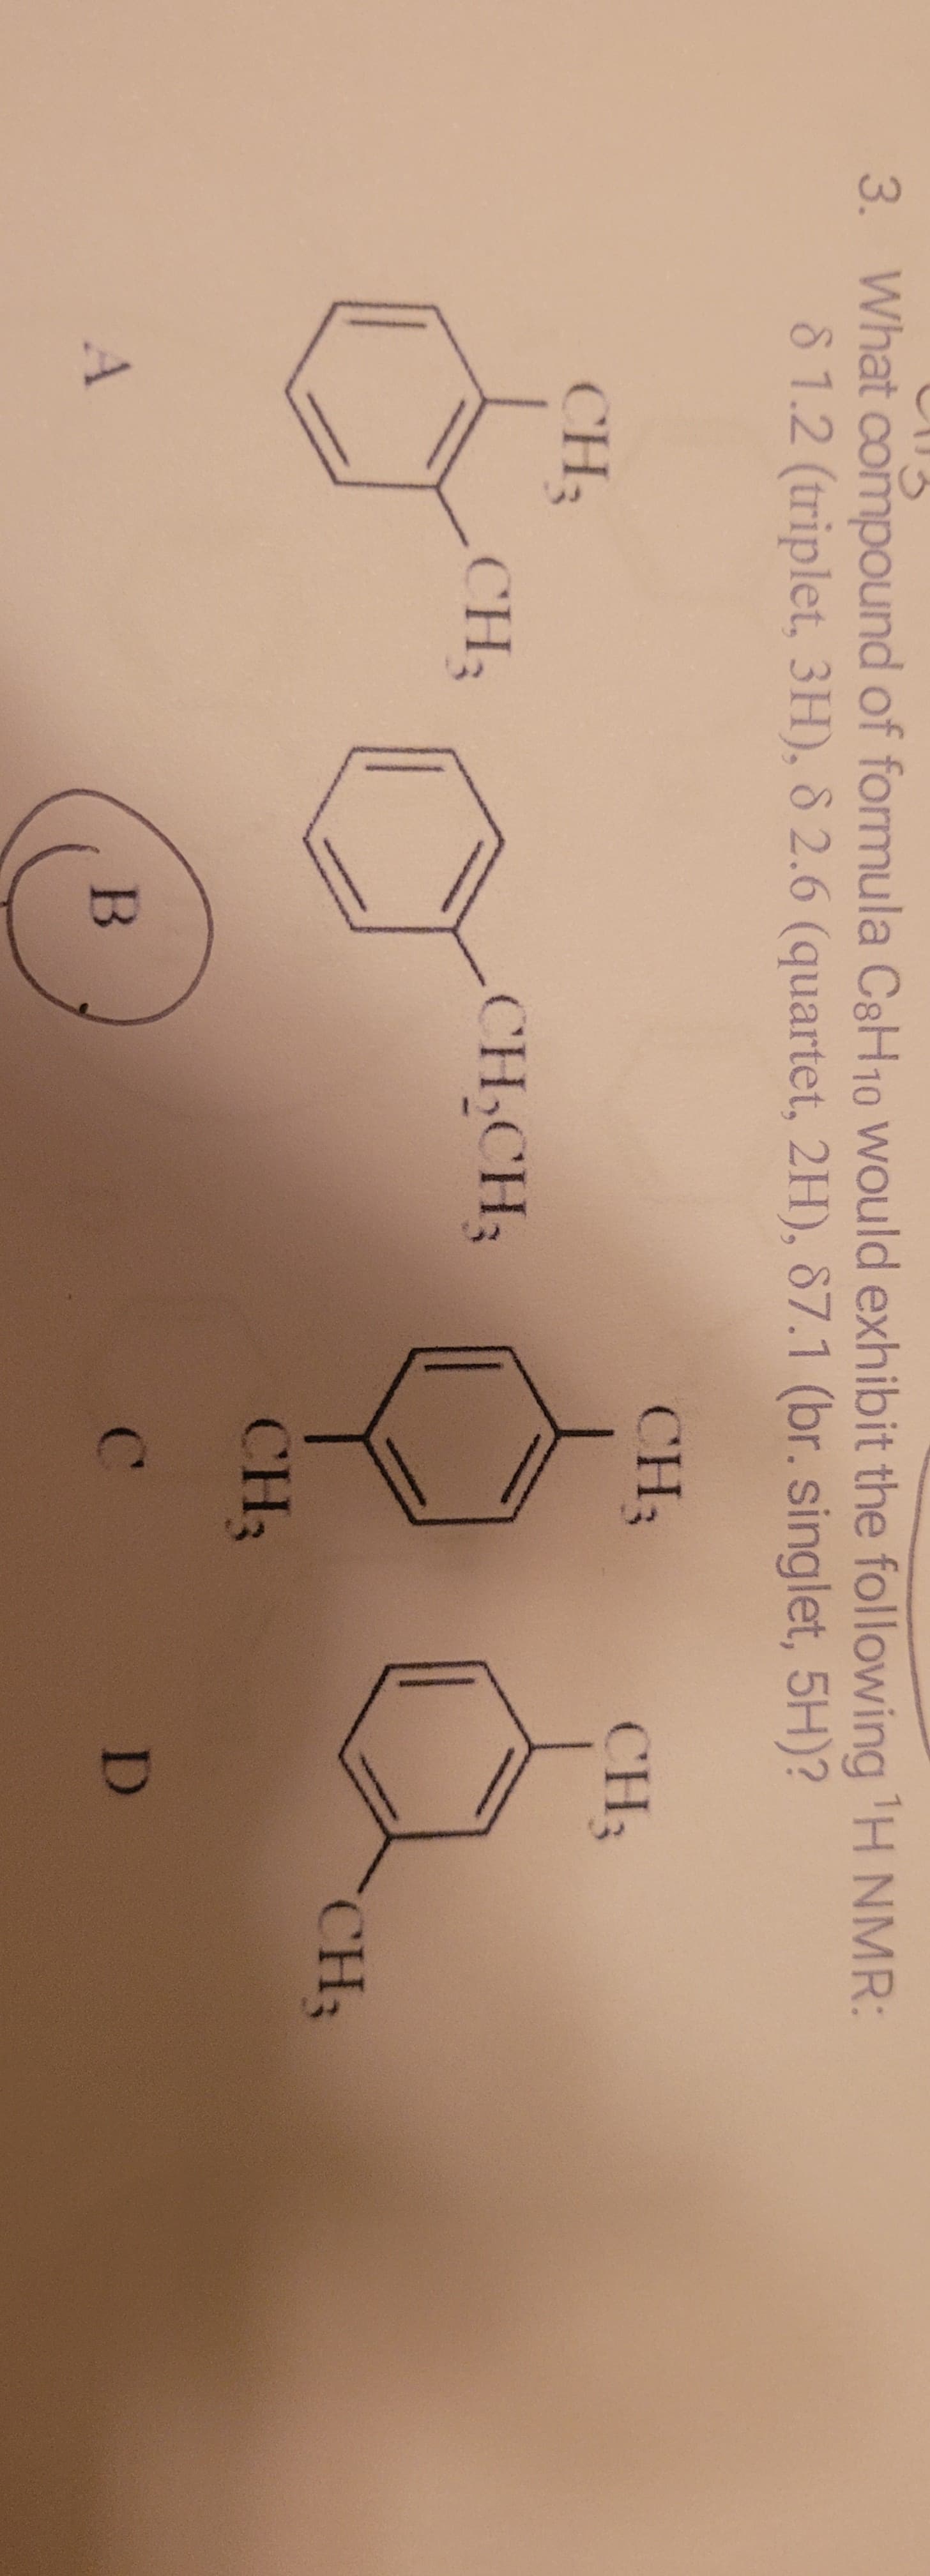 3. What compound of formula C8H10 Would exhibit the following H NMR:
8 1.2 (triplet, 3H), 8 2.6 (quartet, 2H), 87.1 (br. singlet, 5H)?
CH3
CH3
CH3
CH3
CH,CH3
CH3
CH3
C.
D
B
